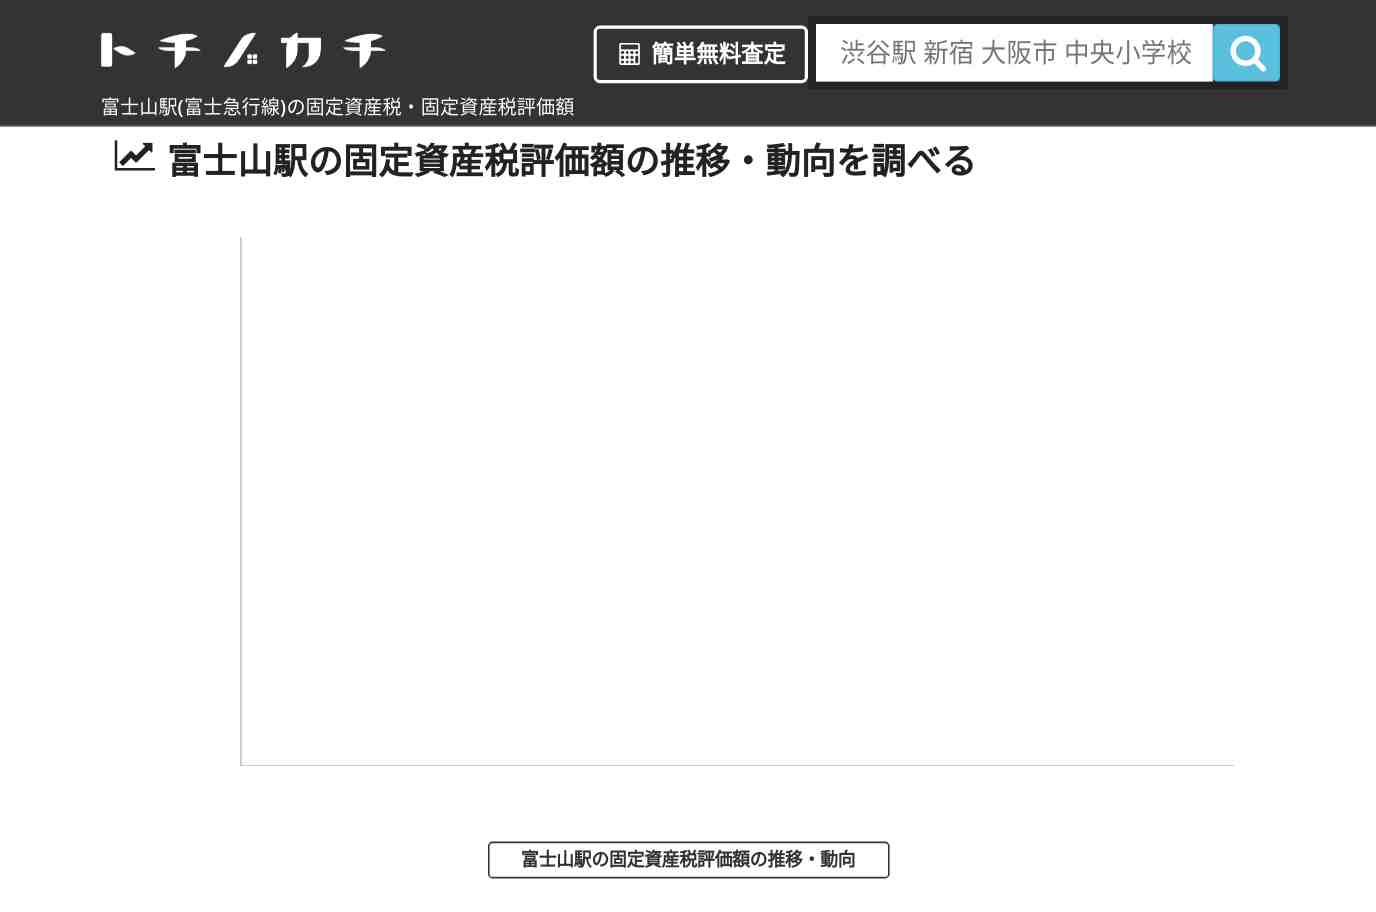 富士山駅(富士急行線)の固定資産税・固定資産税評価額 | トチノカチ